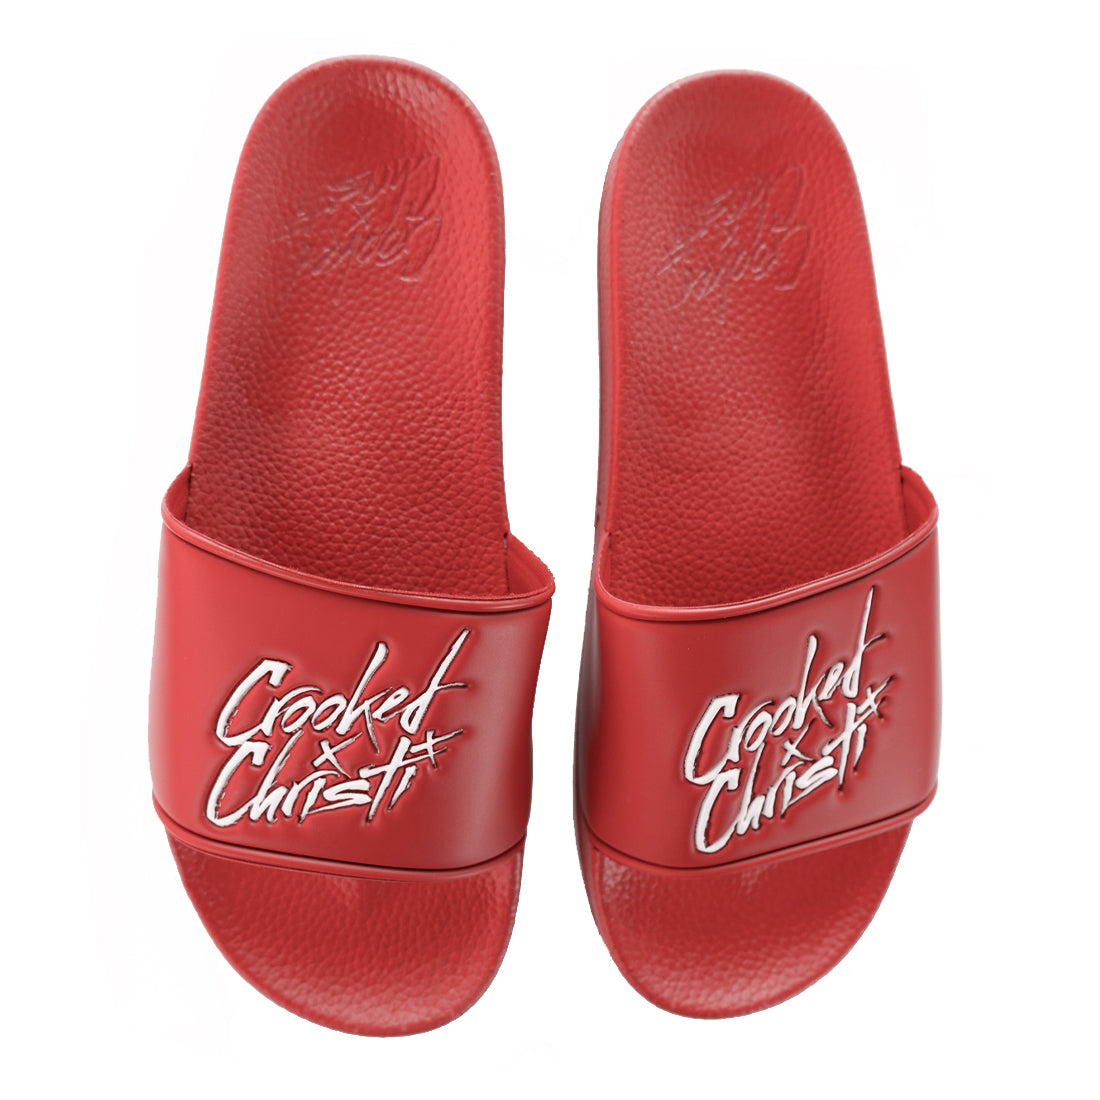 Crooked Christi Slides Shoes